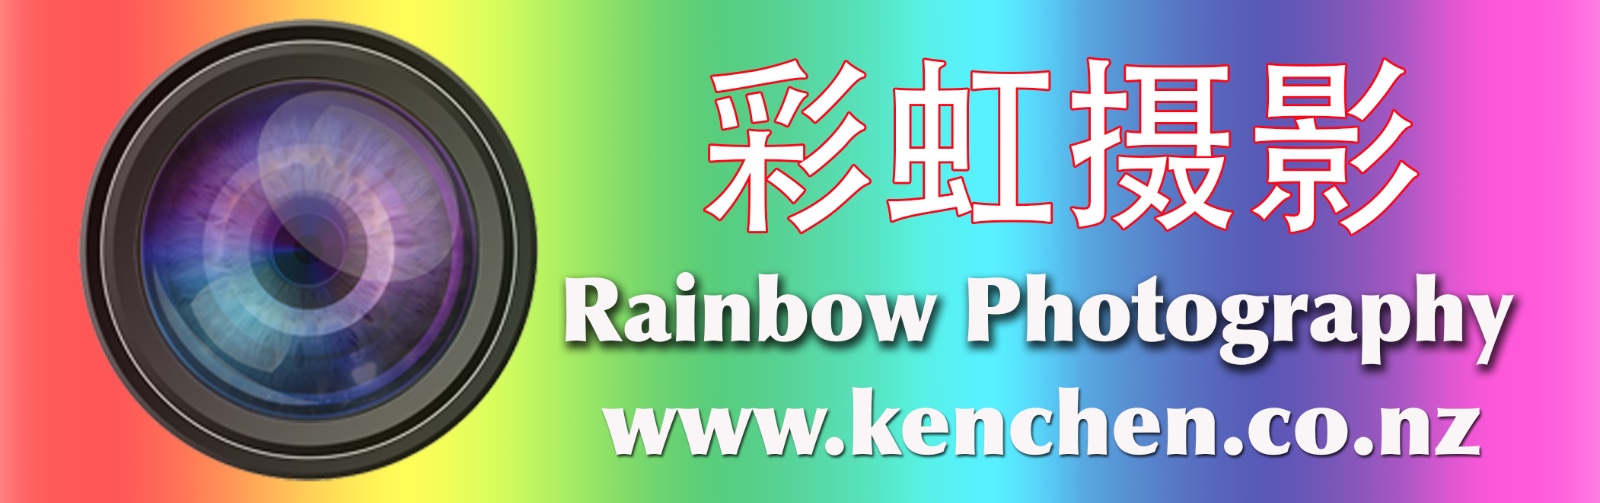 logo_rainbowphoto2.jpg